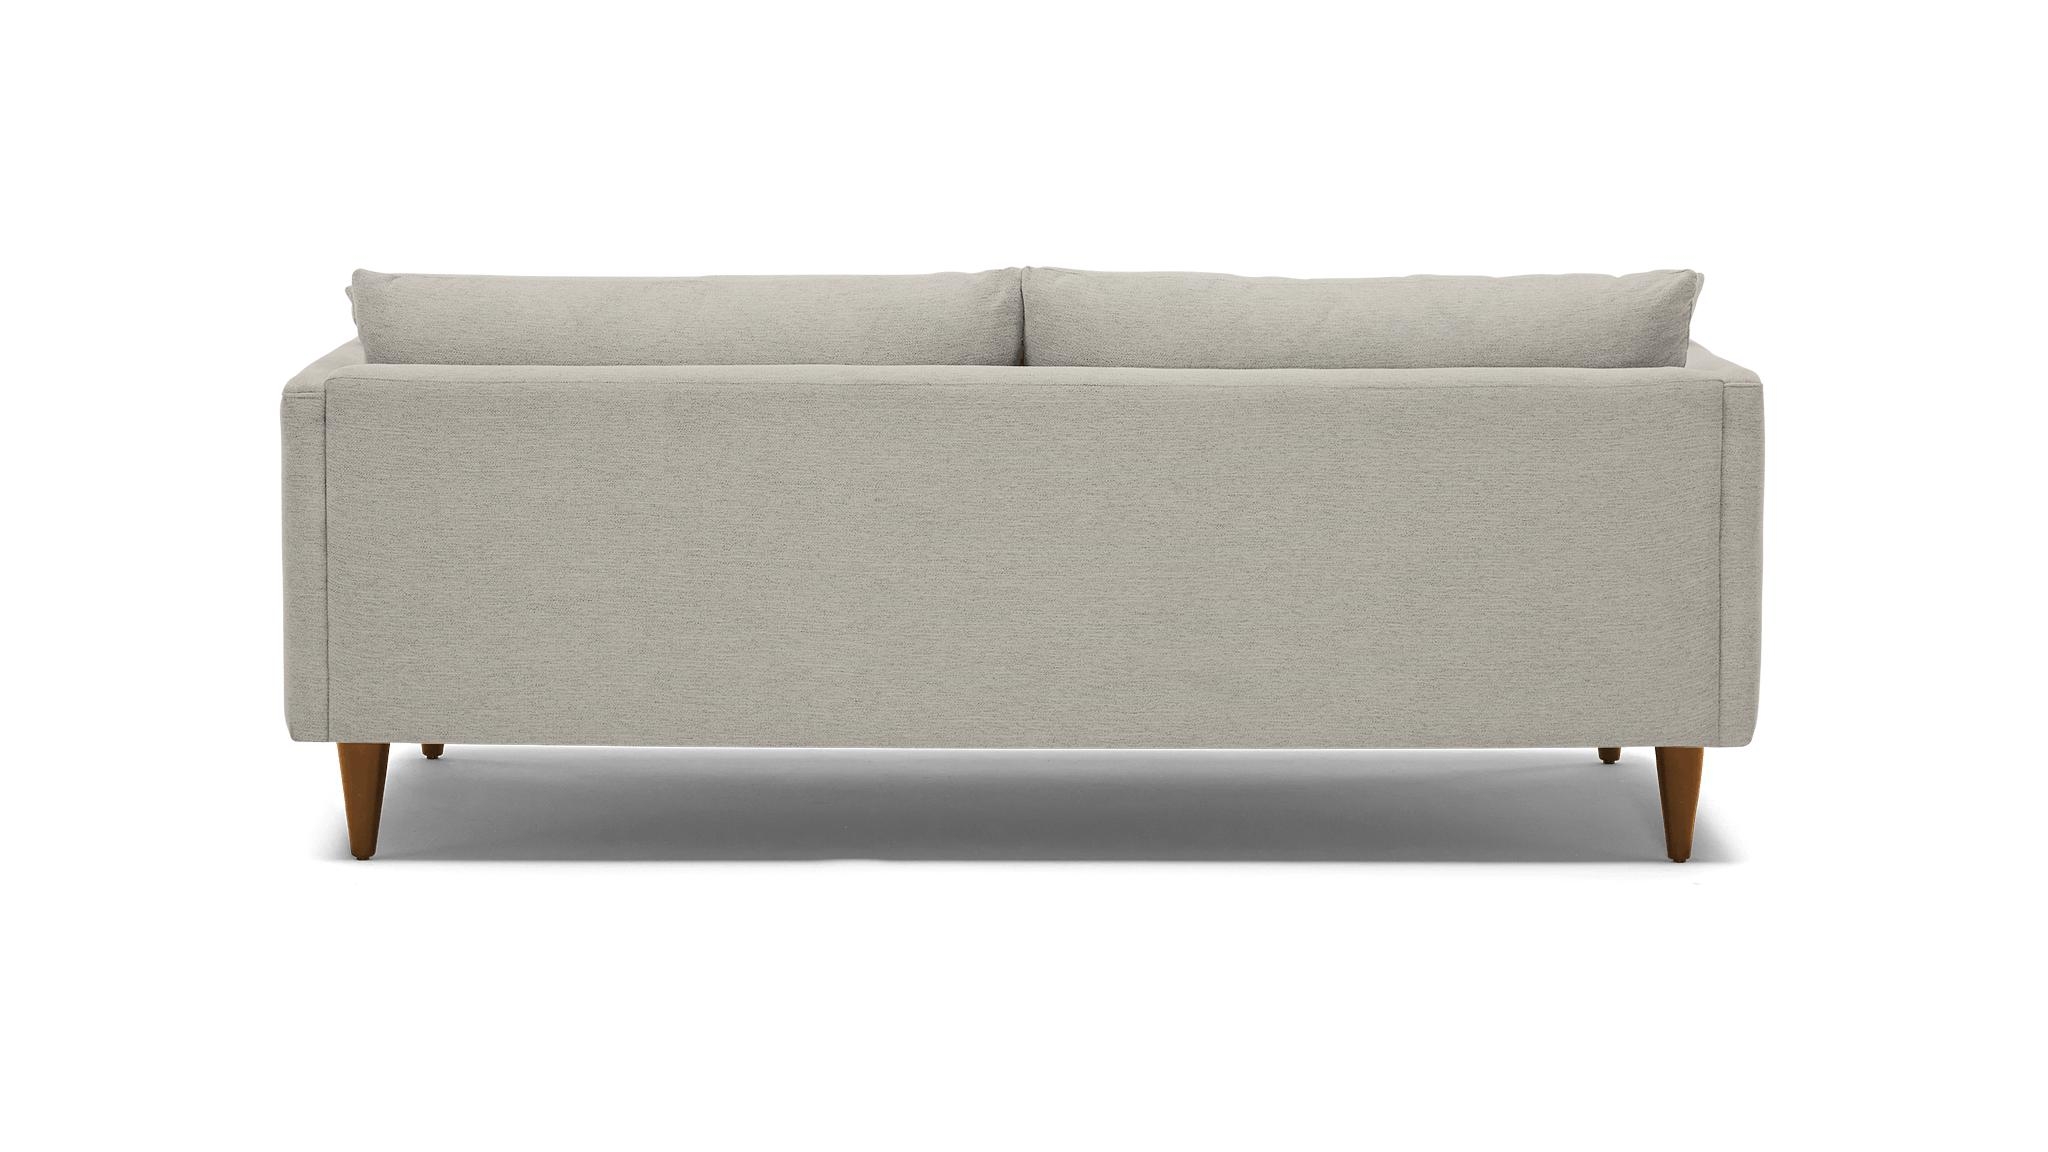 White Lewis Mid Century Modern Sofa - Bloke Cotton - Mocha - Cone - Image 4